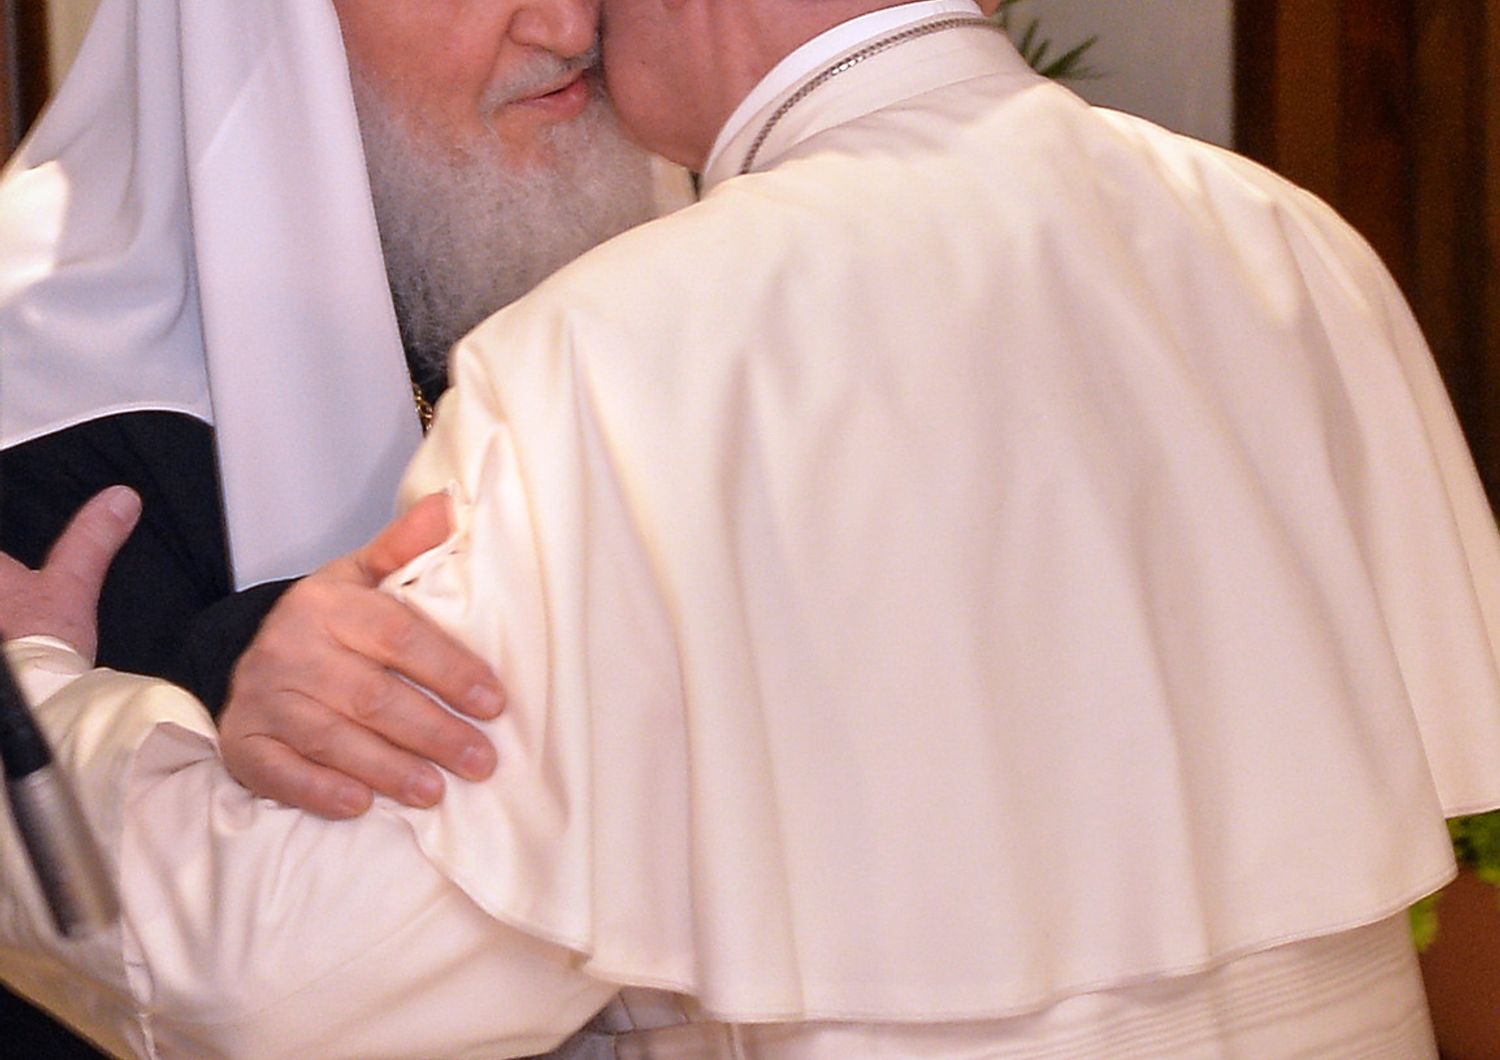 Papa abbraccia Kirill, poi l'incontro &quot;tanto voluto&quot;&nbsp;